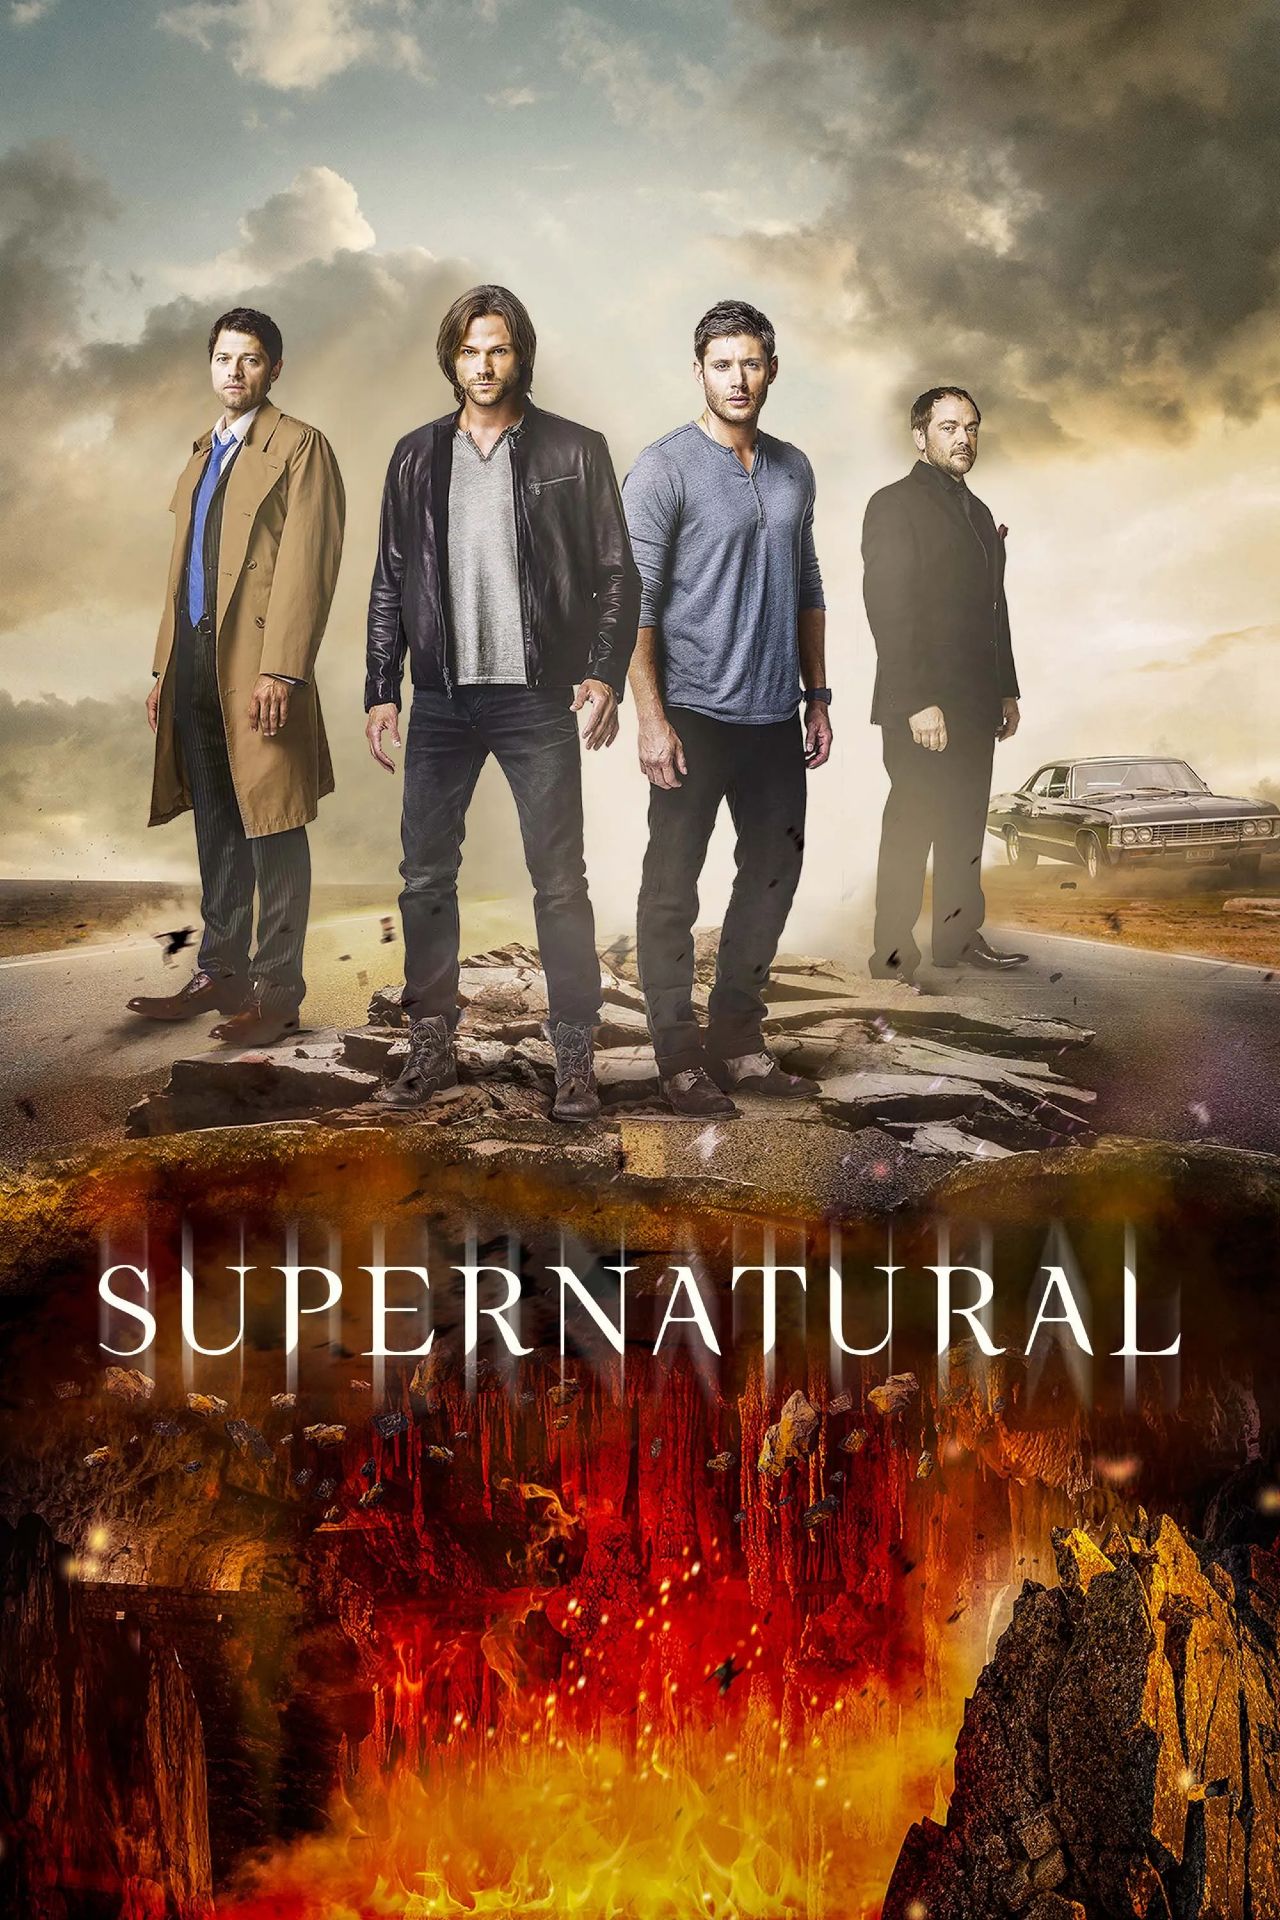 Supernatural: Every Season Ranked